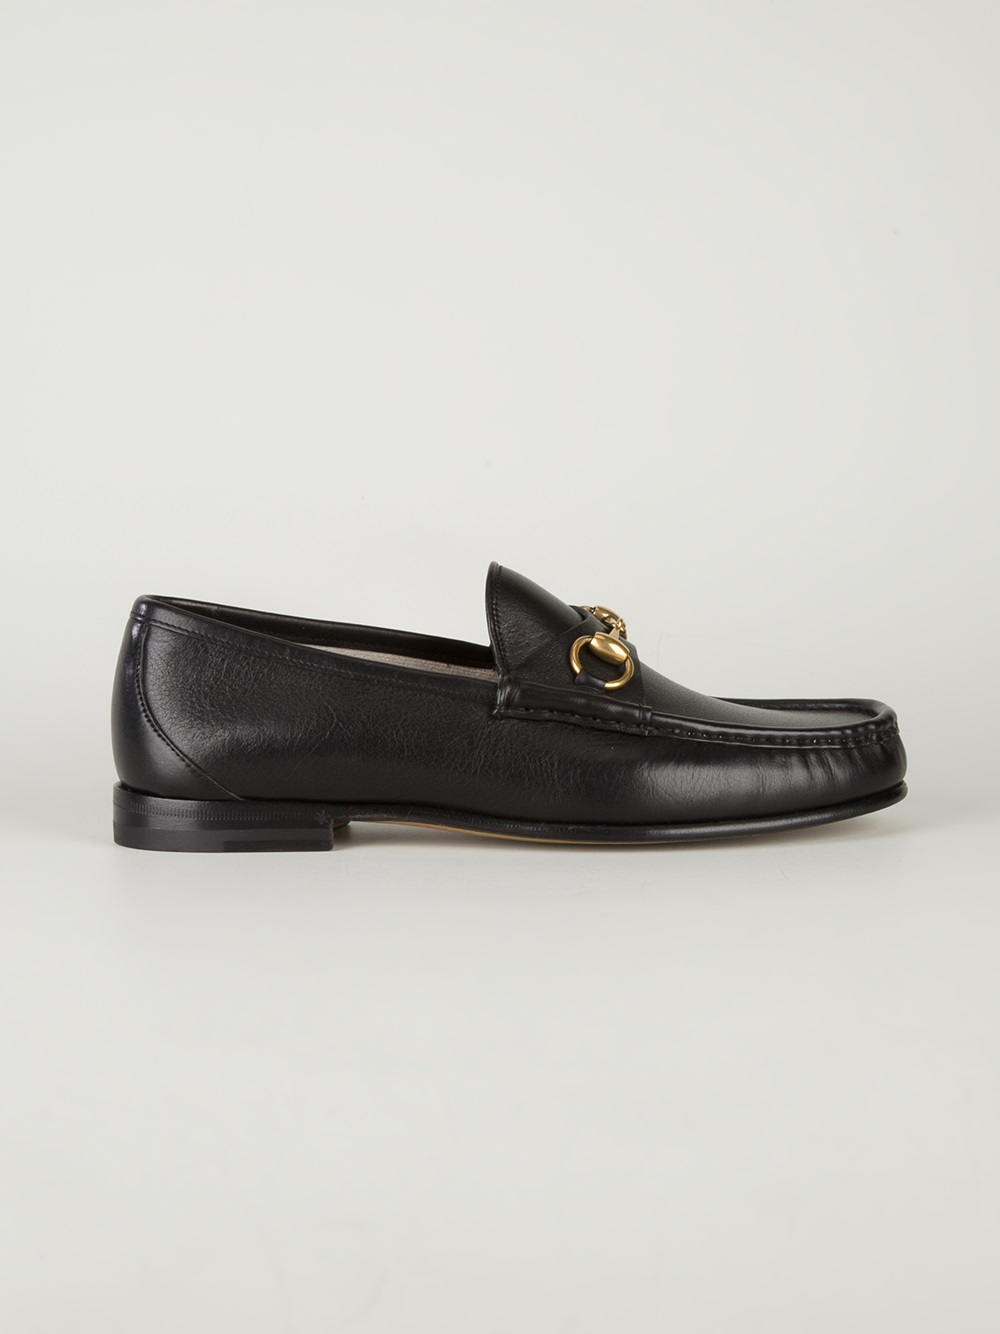 Gucci Leather Horsebit Slipper in Black Leather (Black) for Men - Lyst